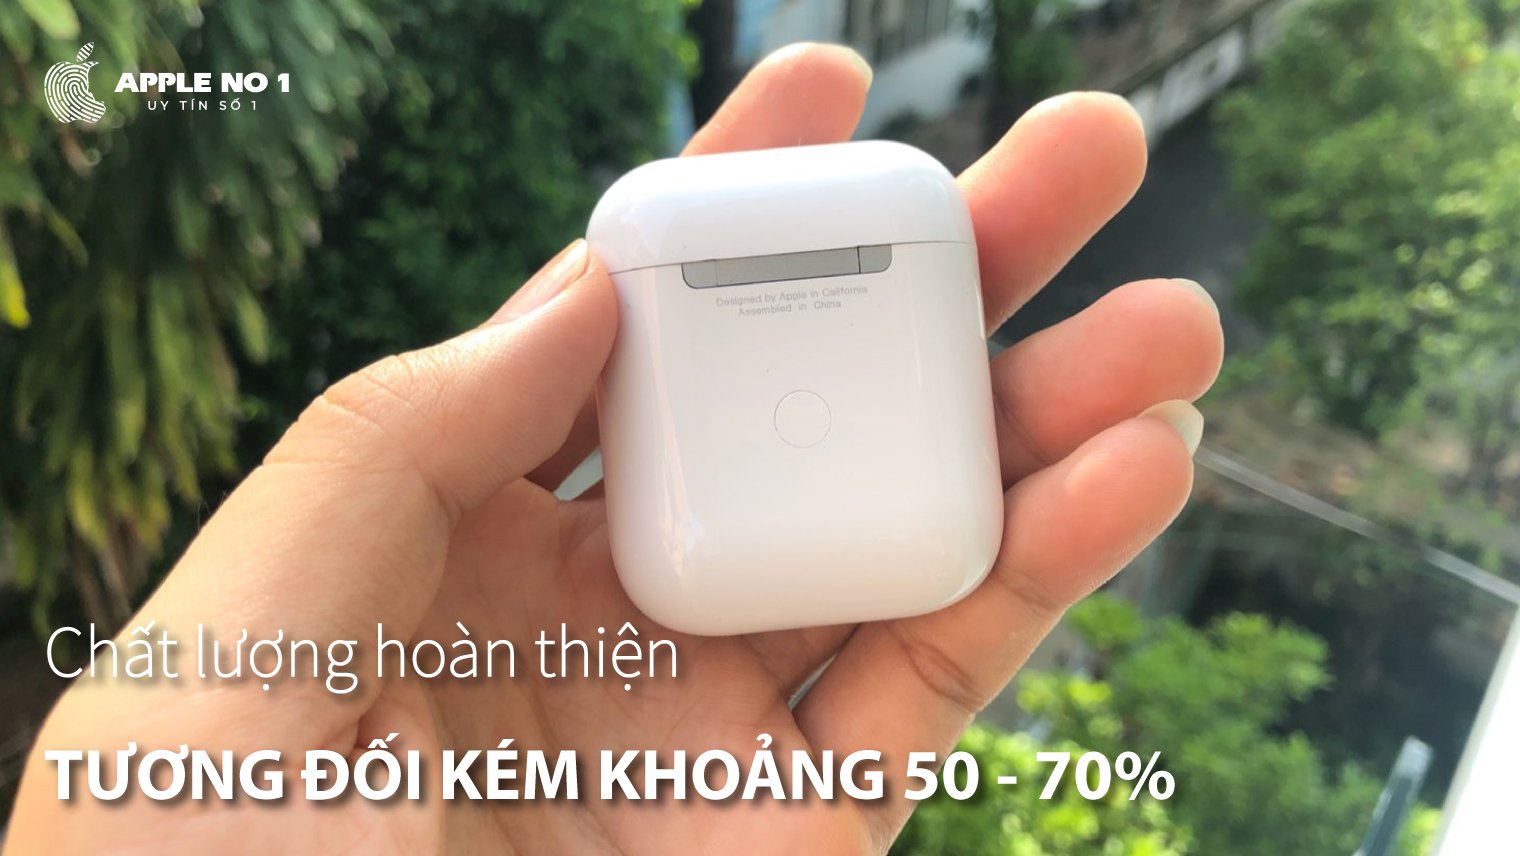 review tai nghe airpod 2 rep 1.1 ve chat luong hoan thien san pham